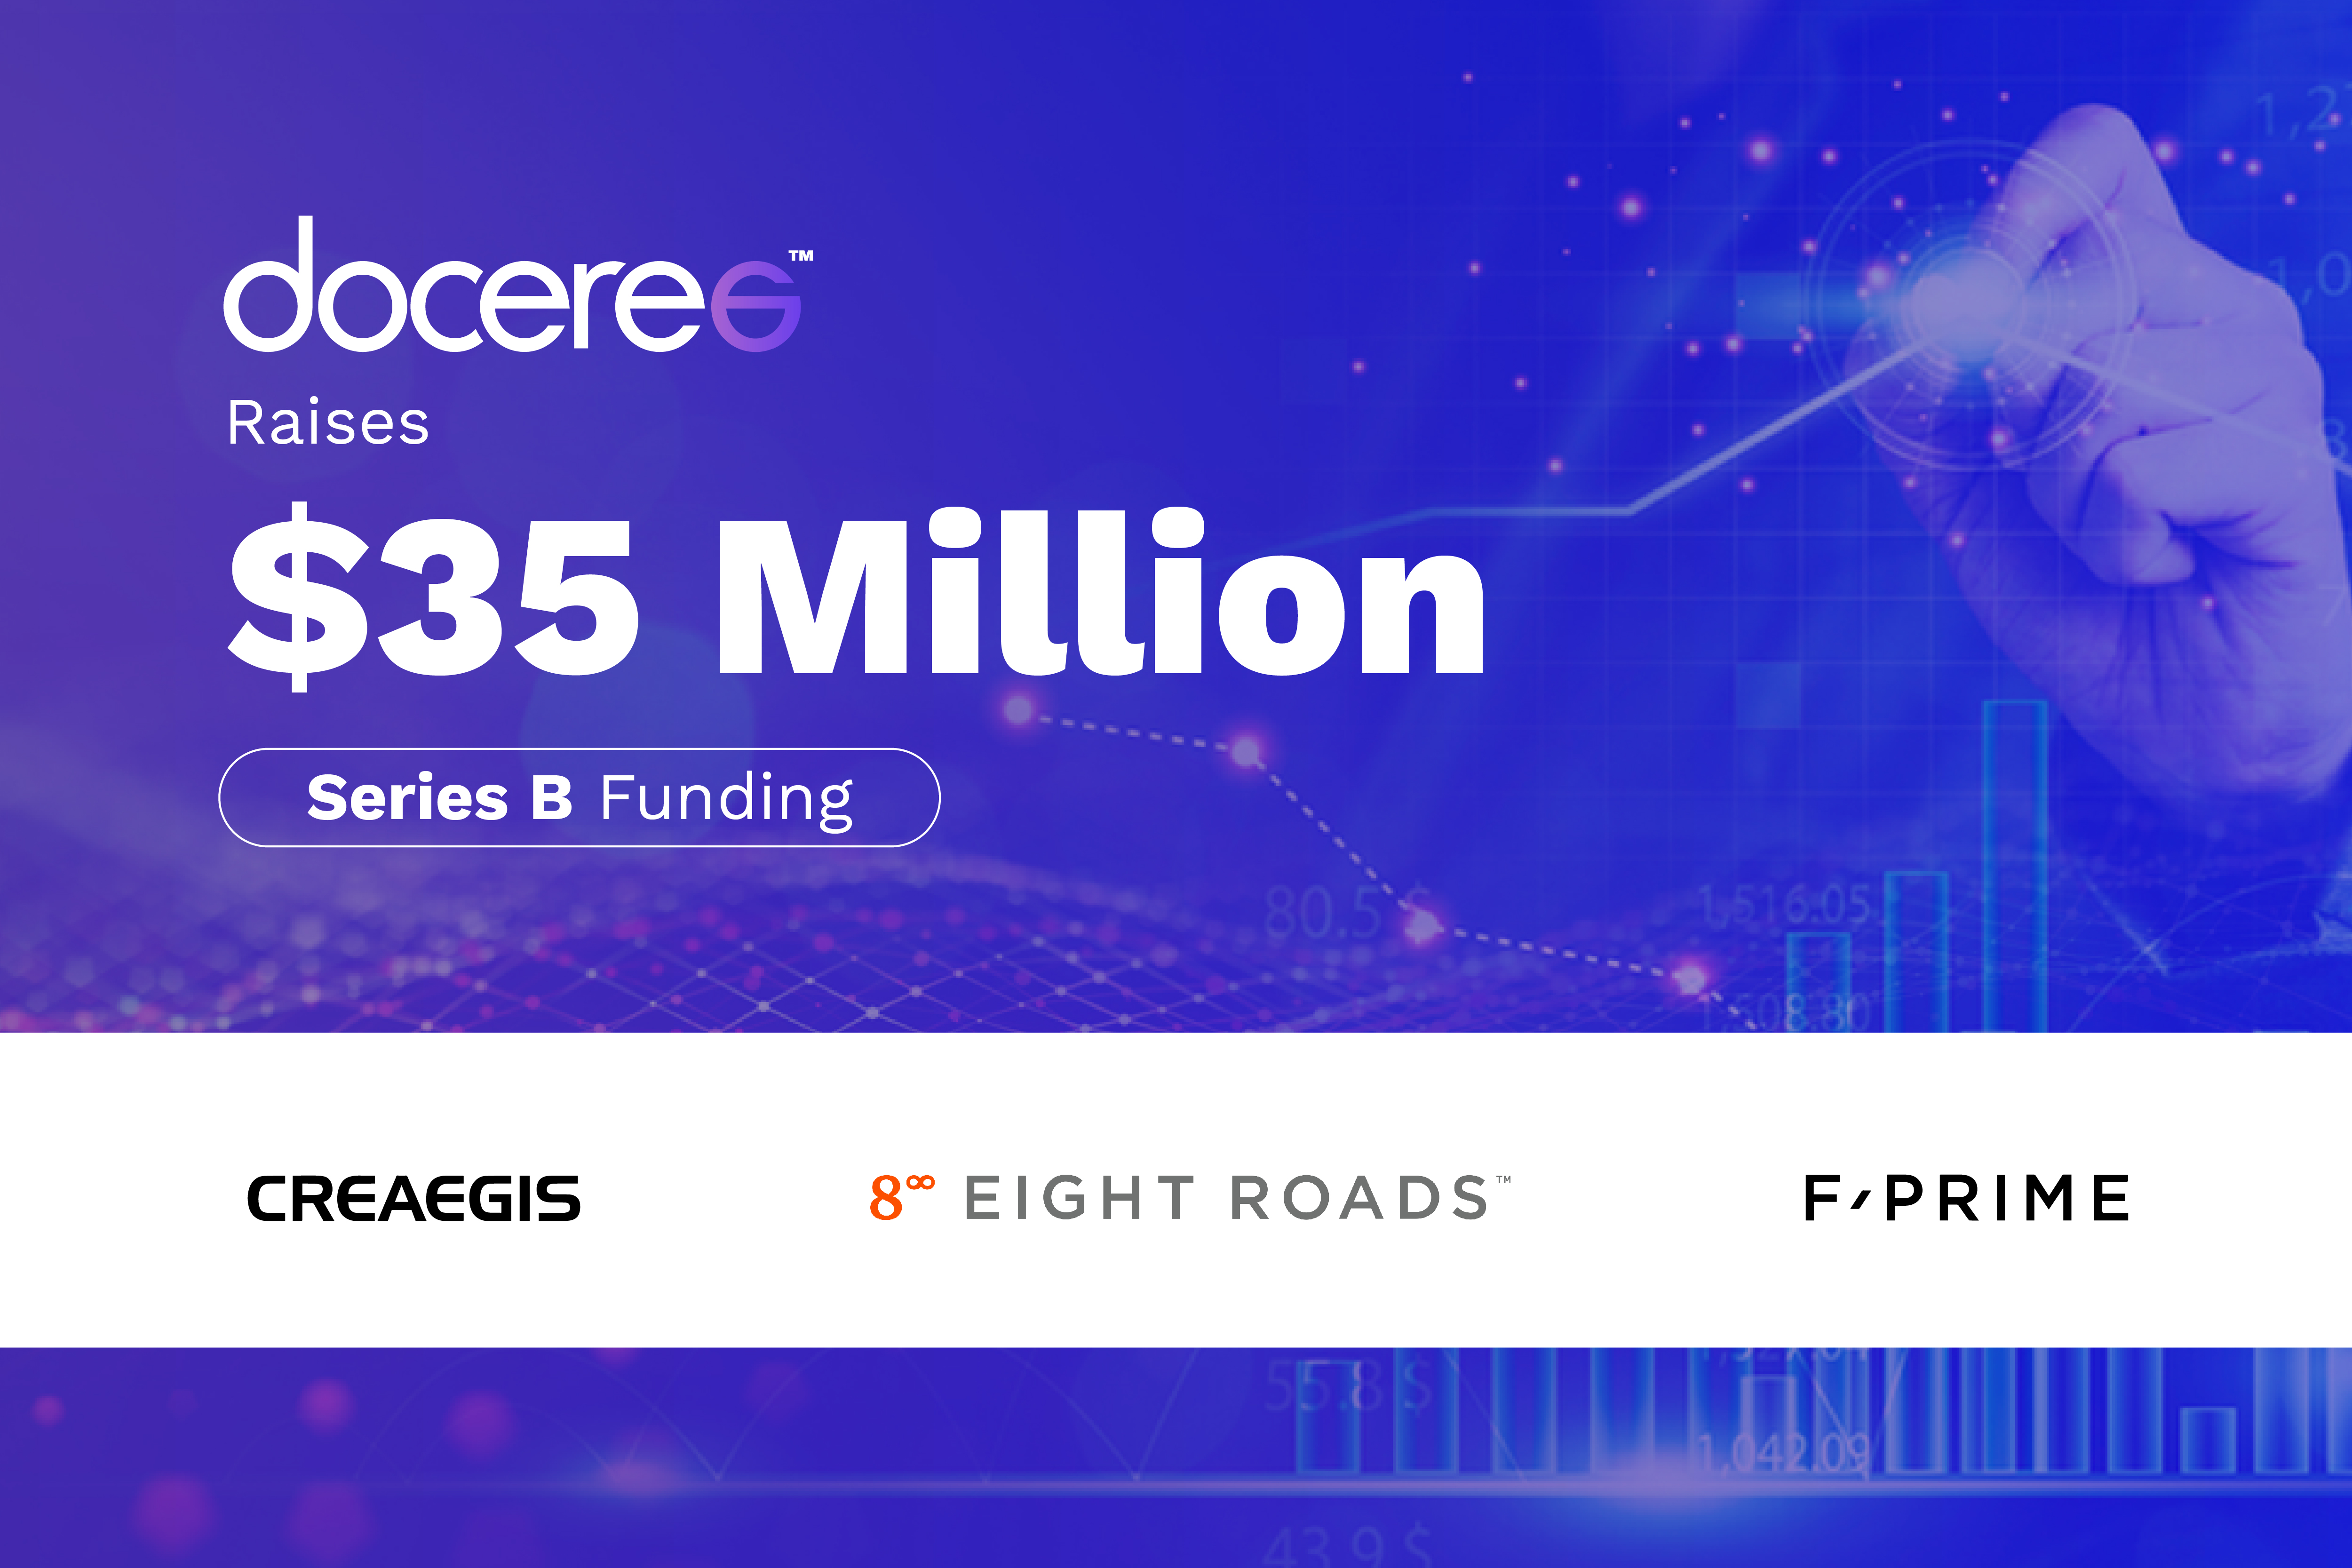 Physician engagement startup Doceree raises $35 million led by Creaegis